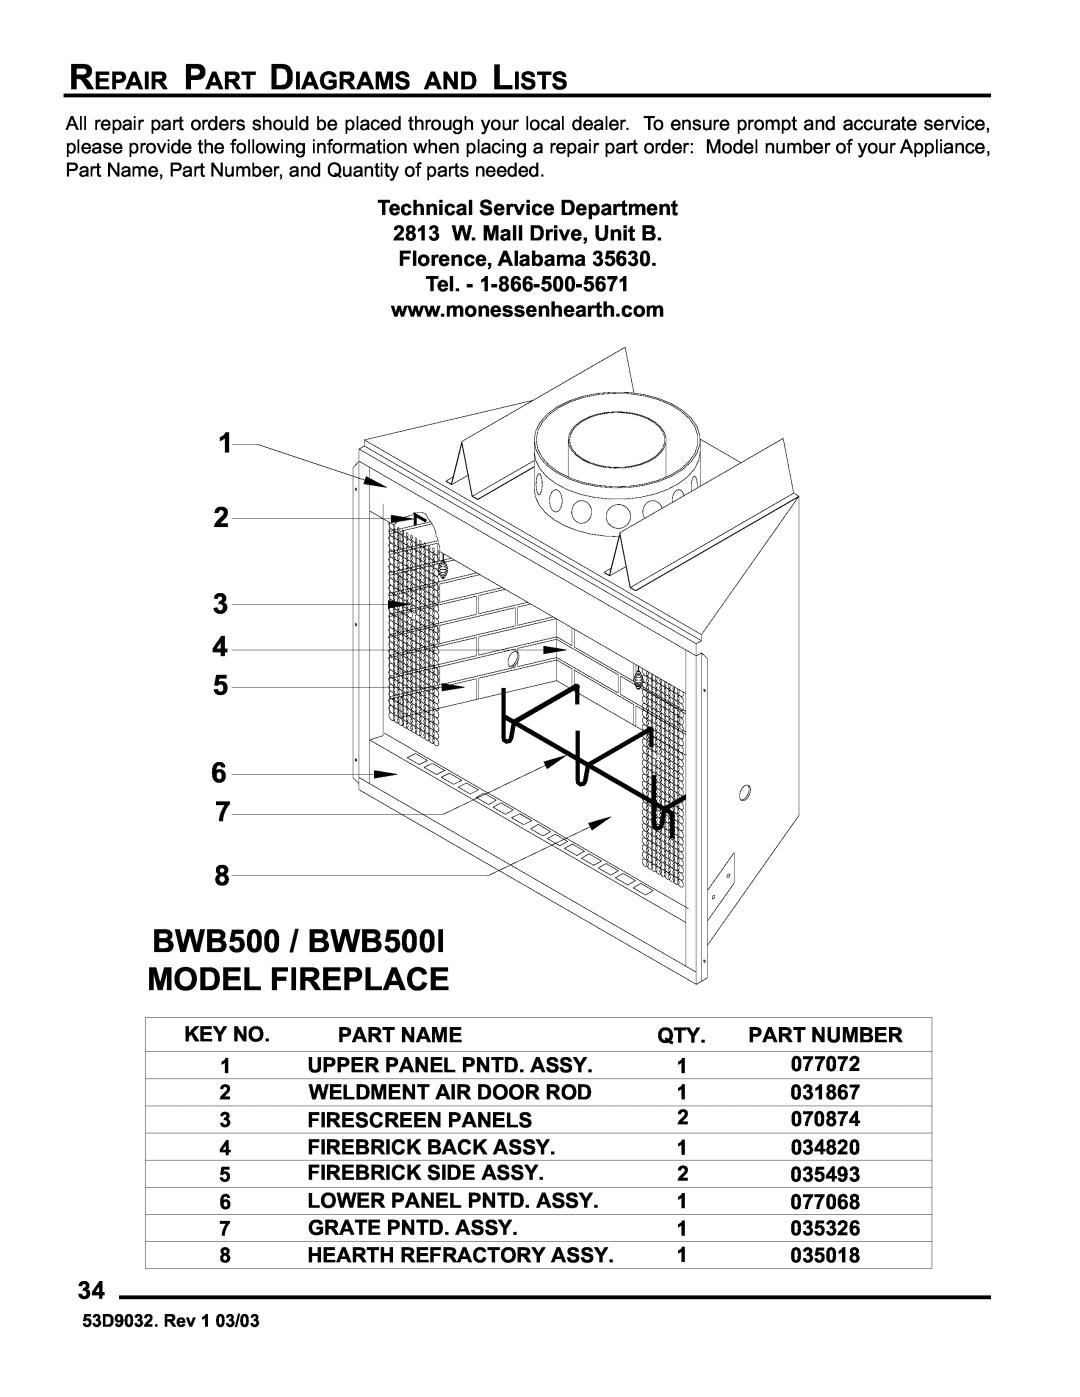 Monessen Hearth BWBC400I, BWB400I manual BWB500 / BWB500I MODEL FIREPLACE, Repair Part Diagrams And Lists 